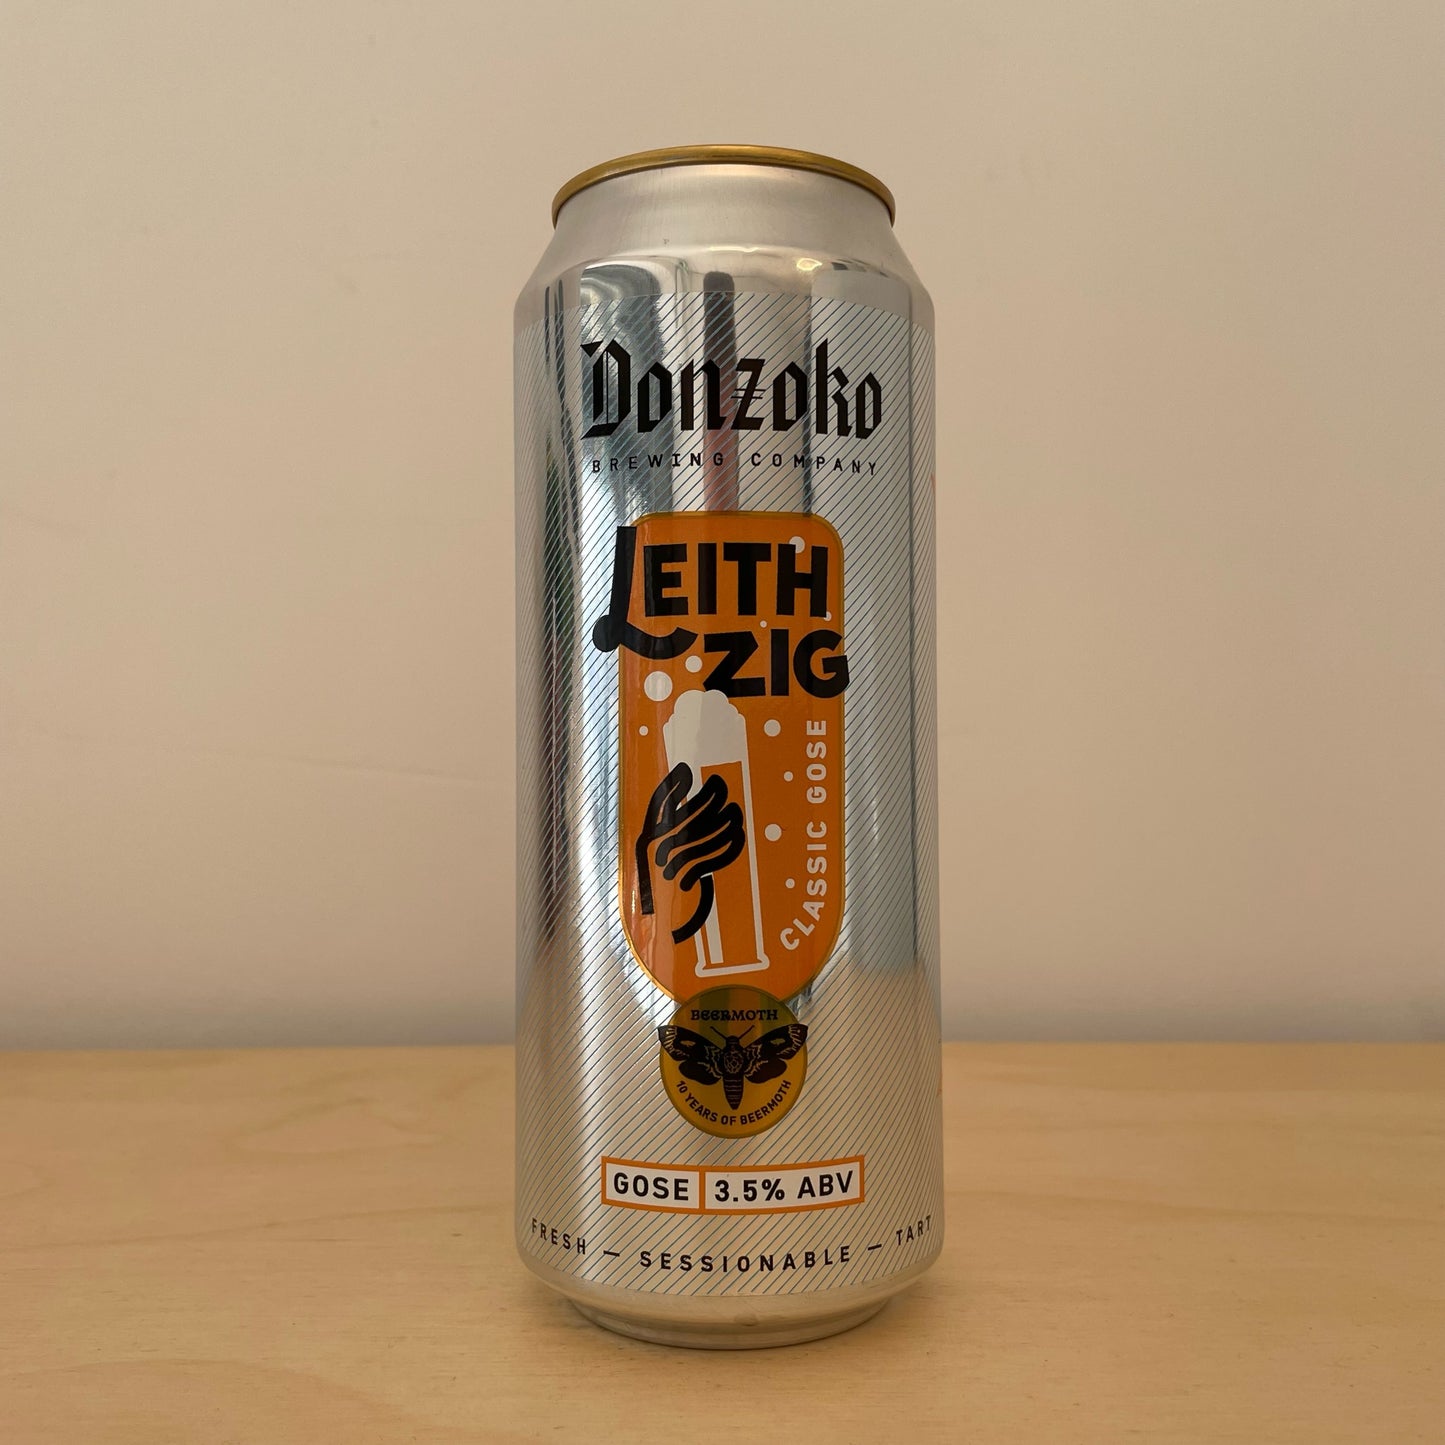 Donzoko x Beermoth Leithzig Gose (500ml Can)